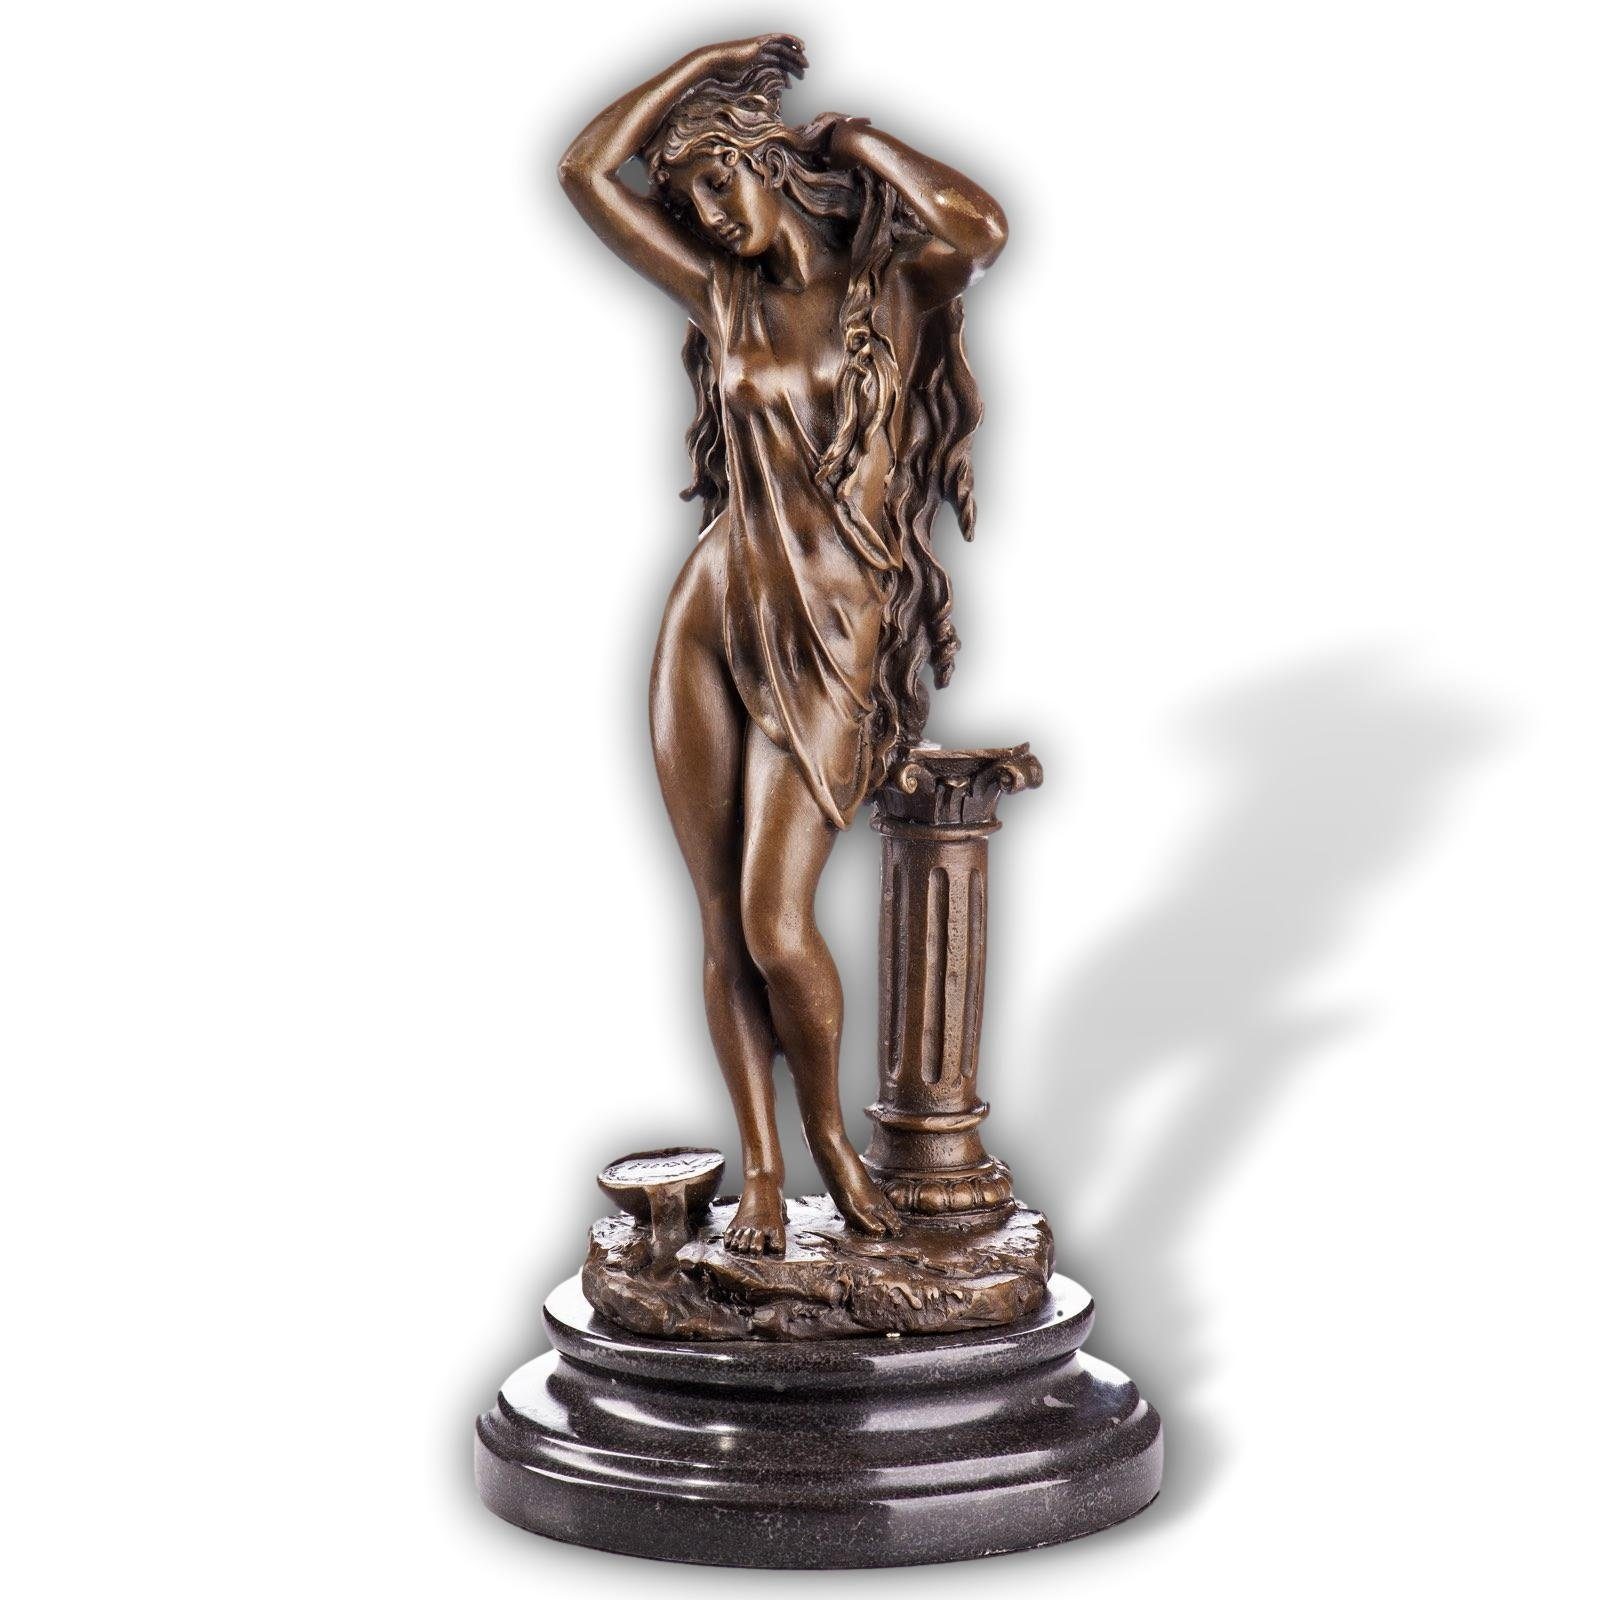 Erotik Aubaho badende Figur Antik-Stil Skulptur 32cm Bronze Statue Skulptur Dame Akt